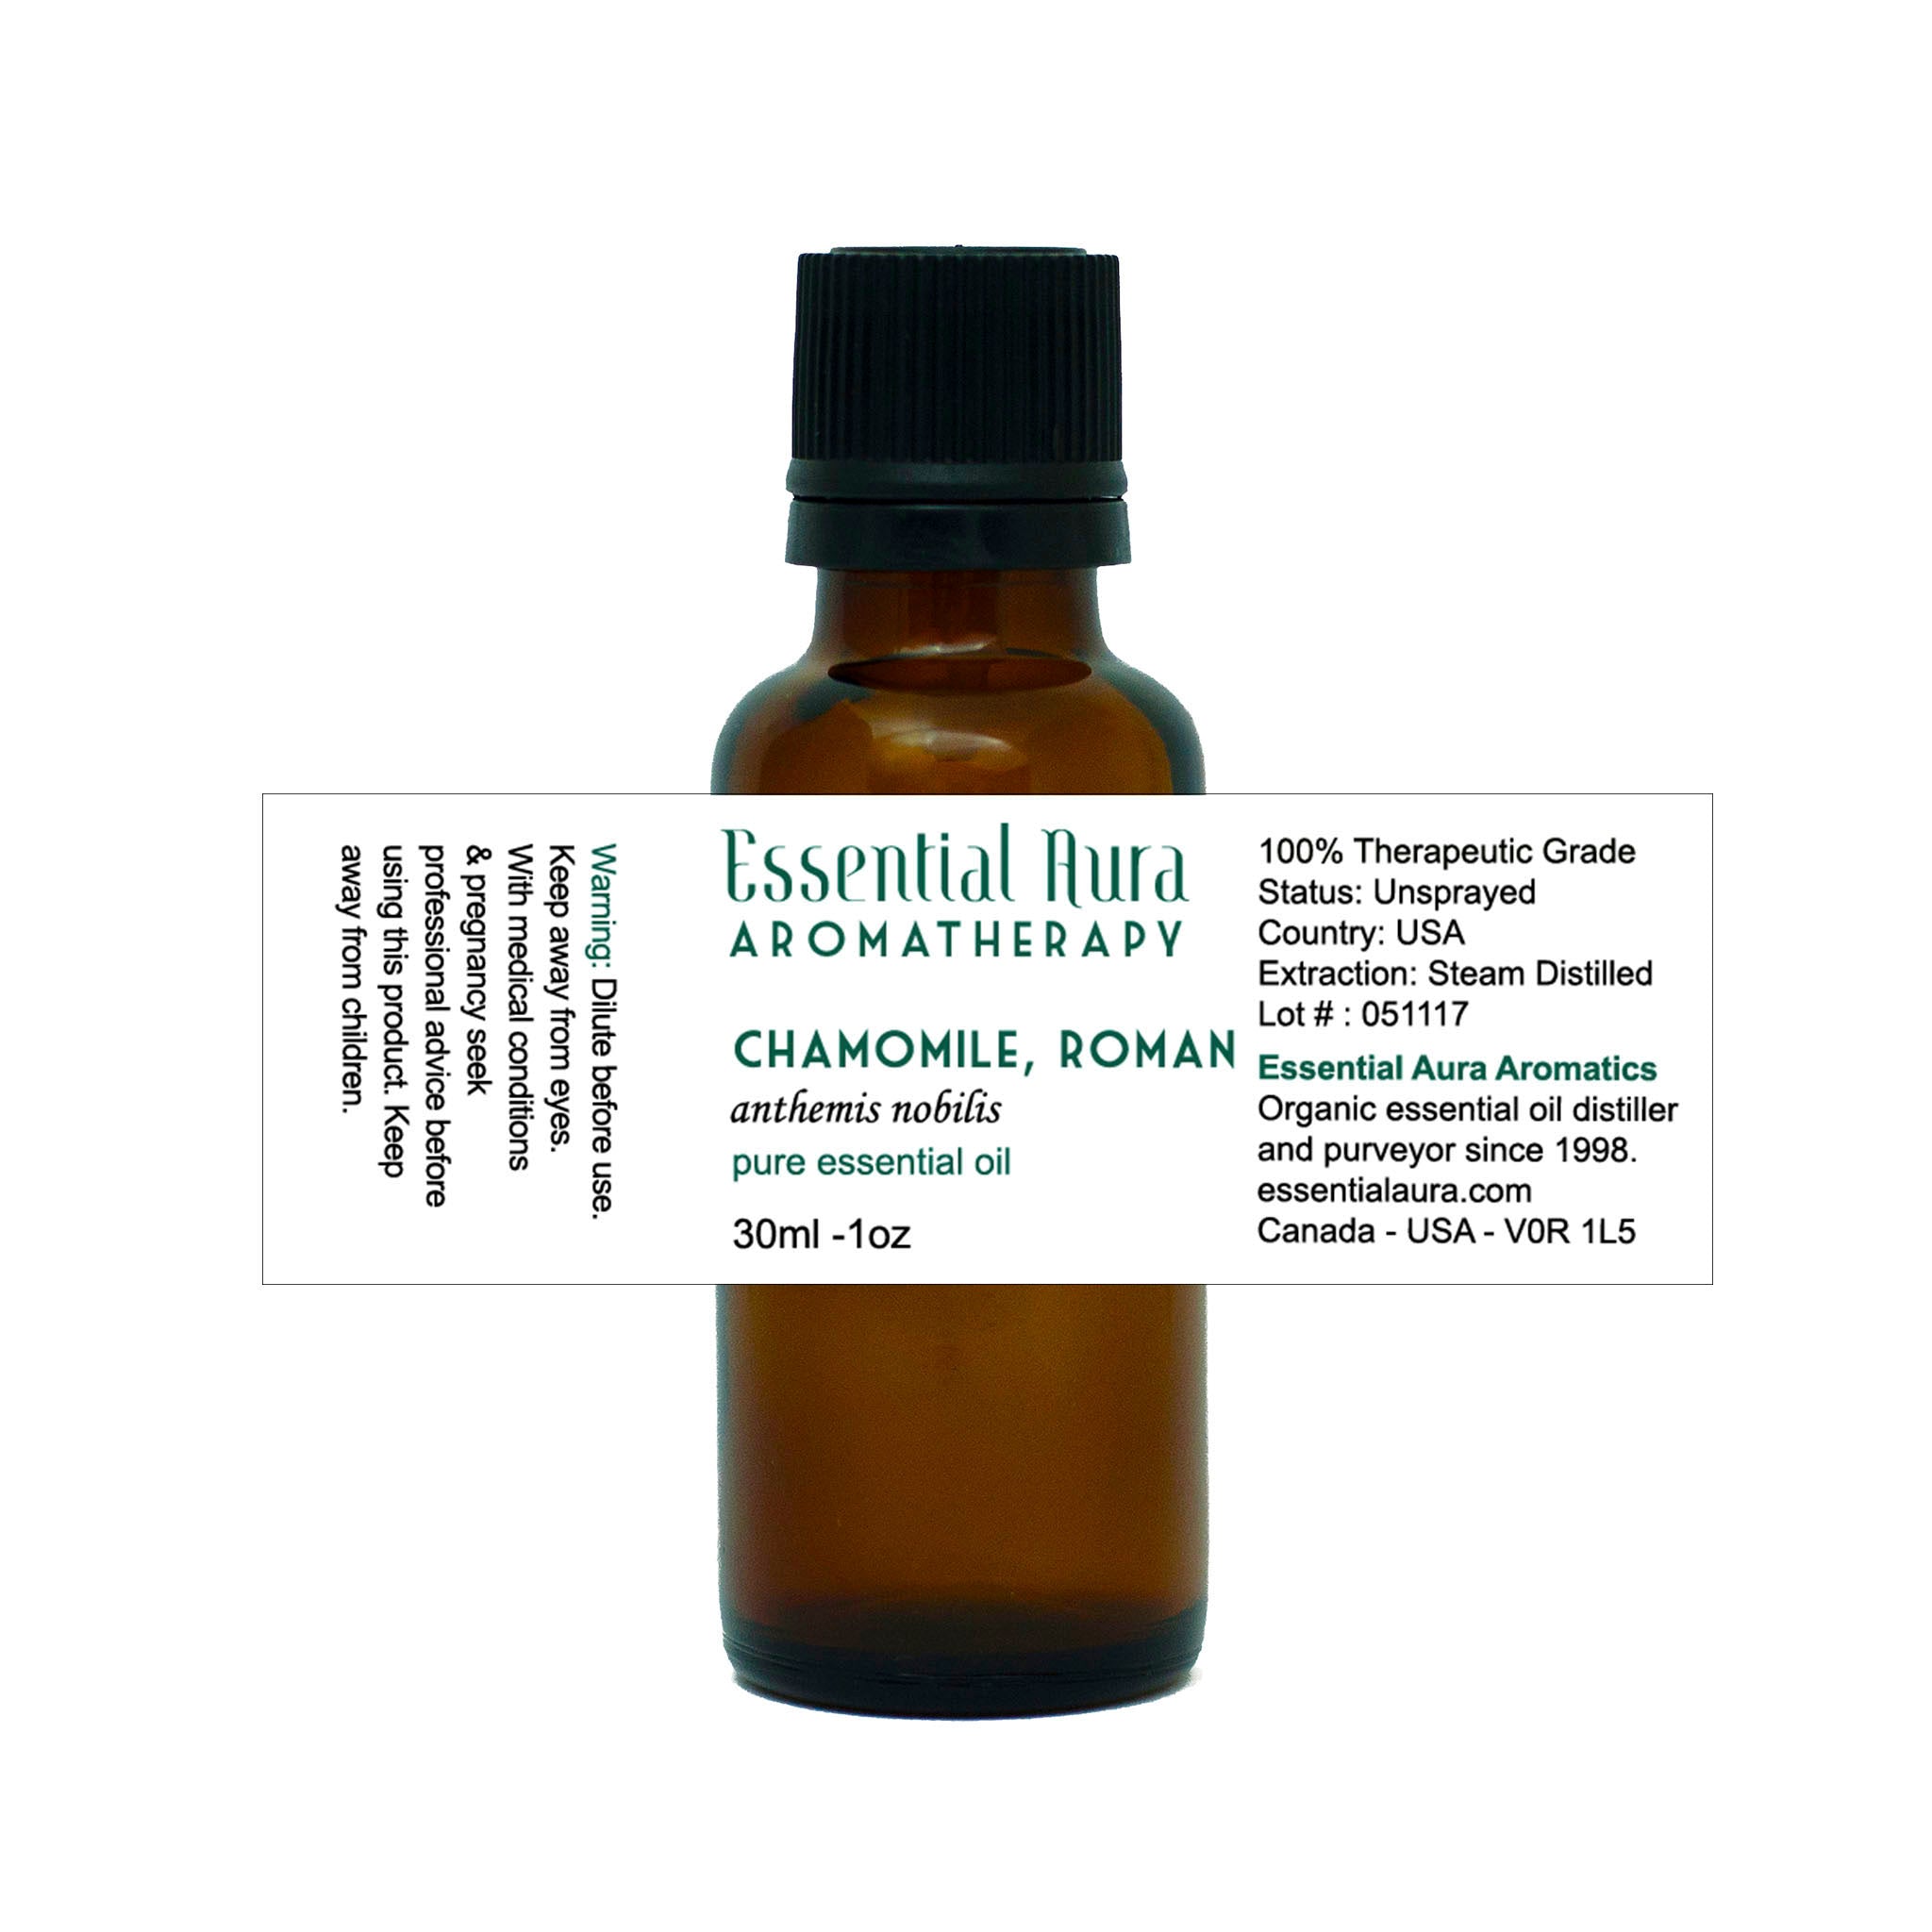 chamomile essential oil in bottle